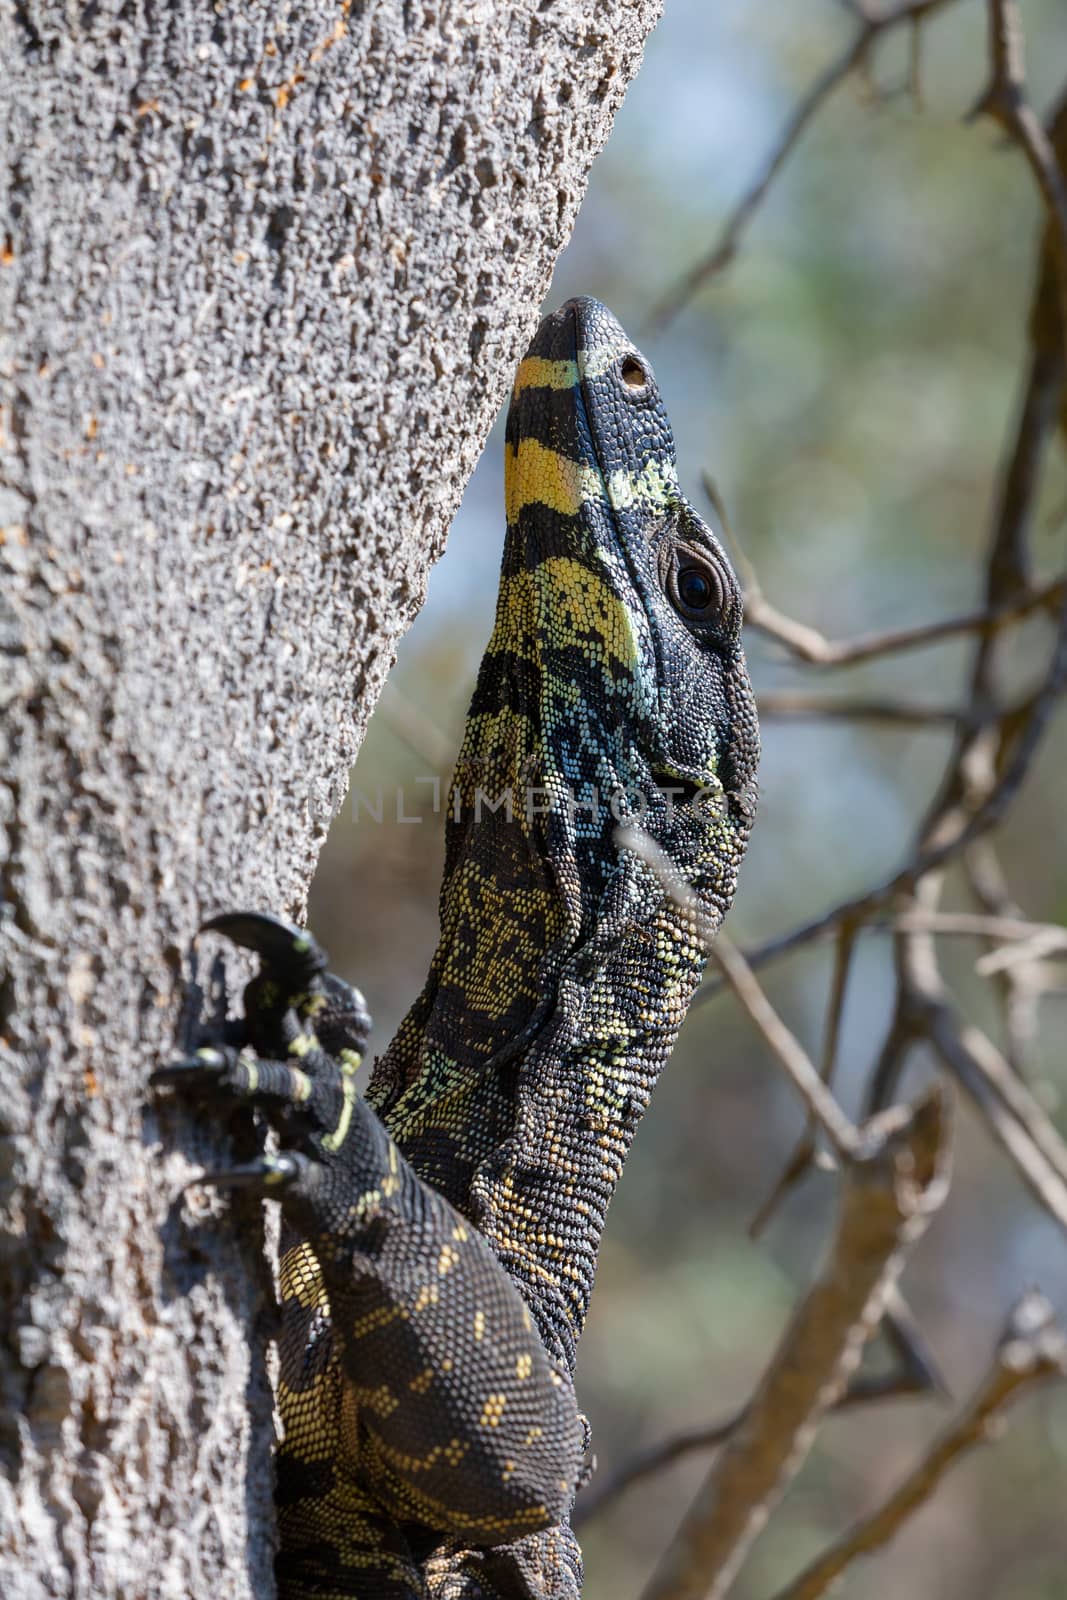 Goanna lizard climbing a tree  by lovleah